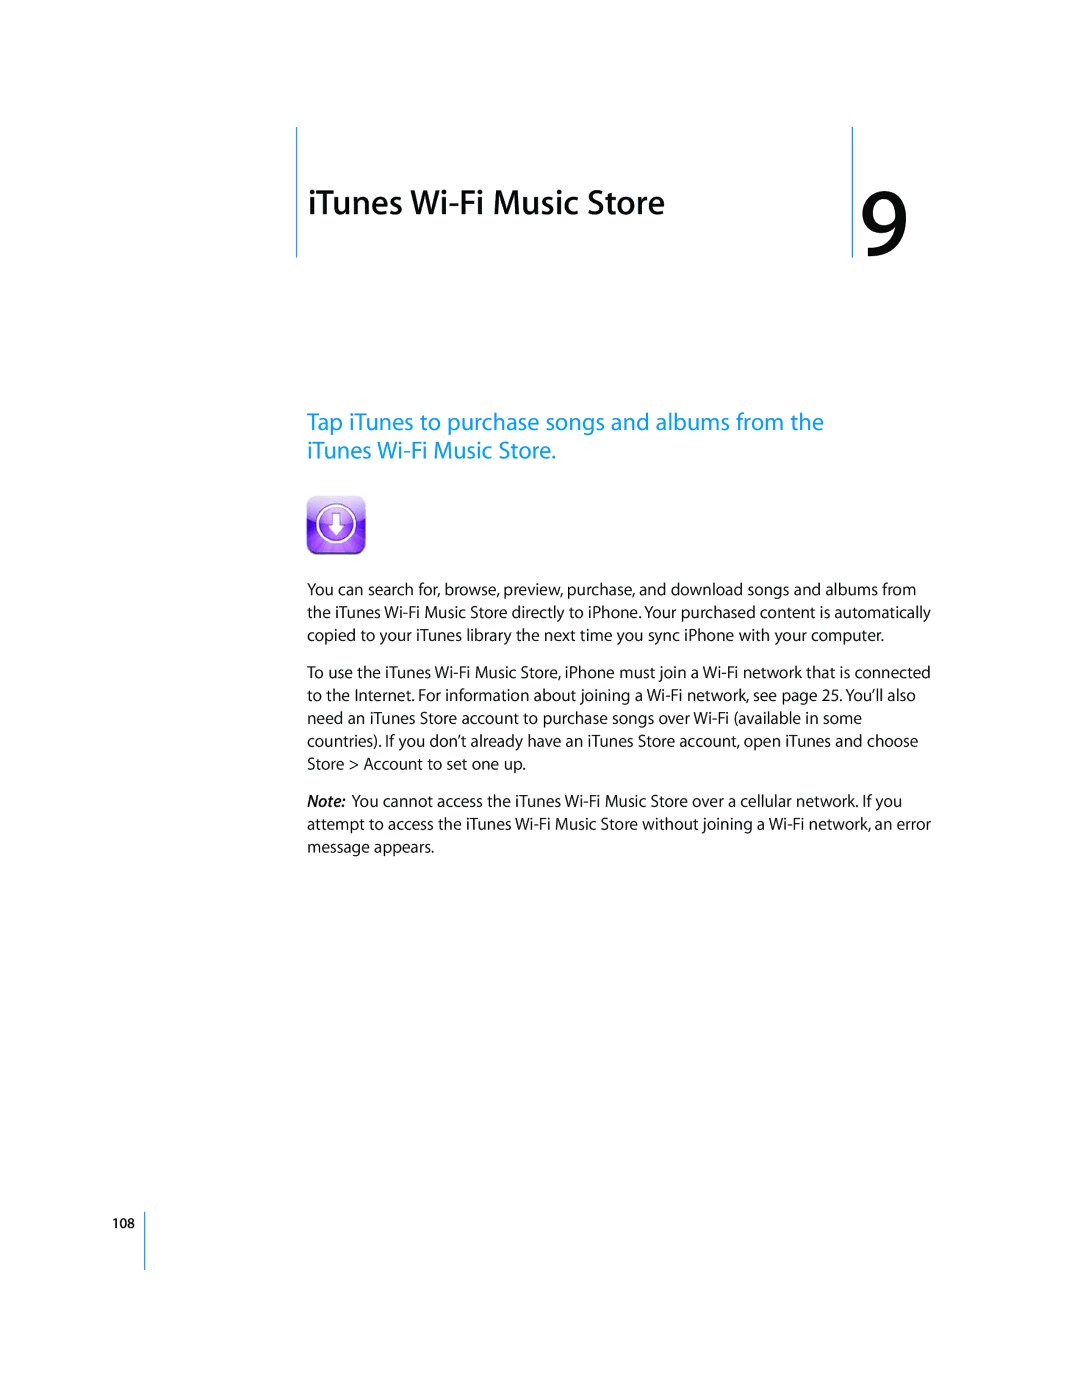 Arkon A1203 manual ITunes Wi-Fi Music Store, 108 